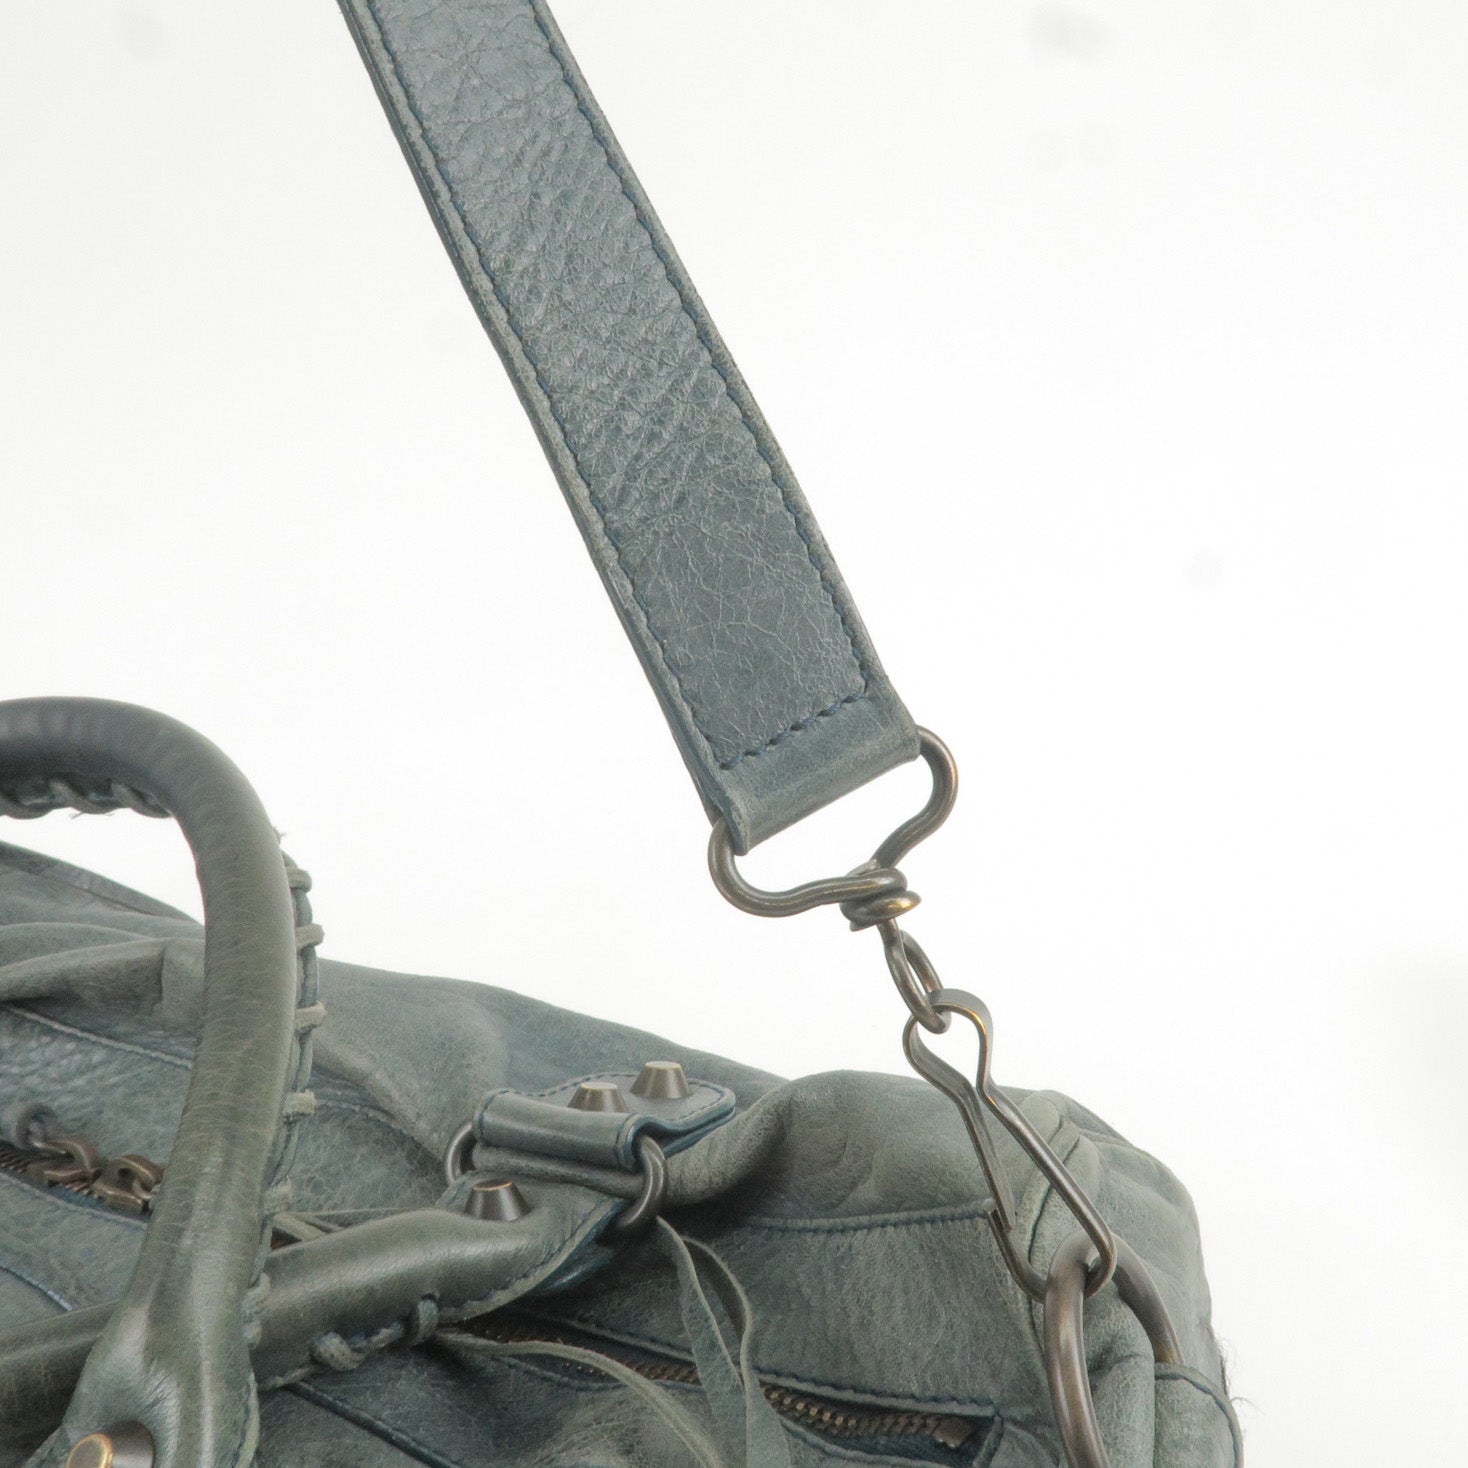 Furla 'Splendida Mini' shoulder bag, Women's Bags